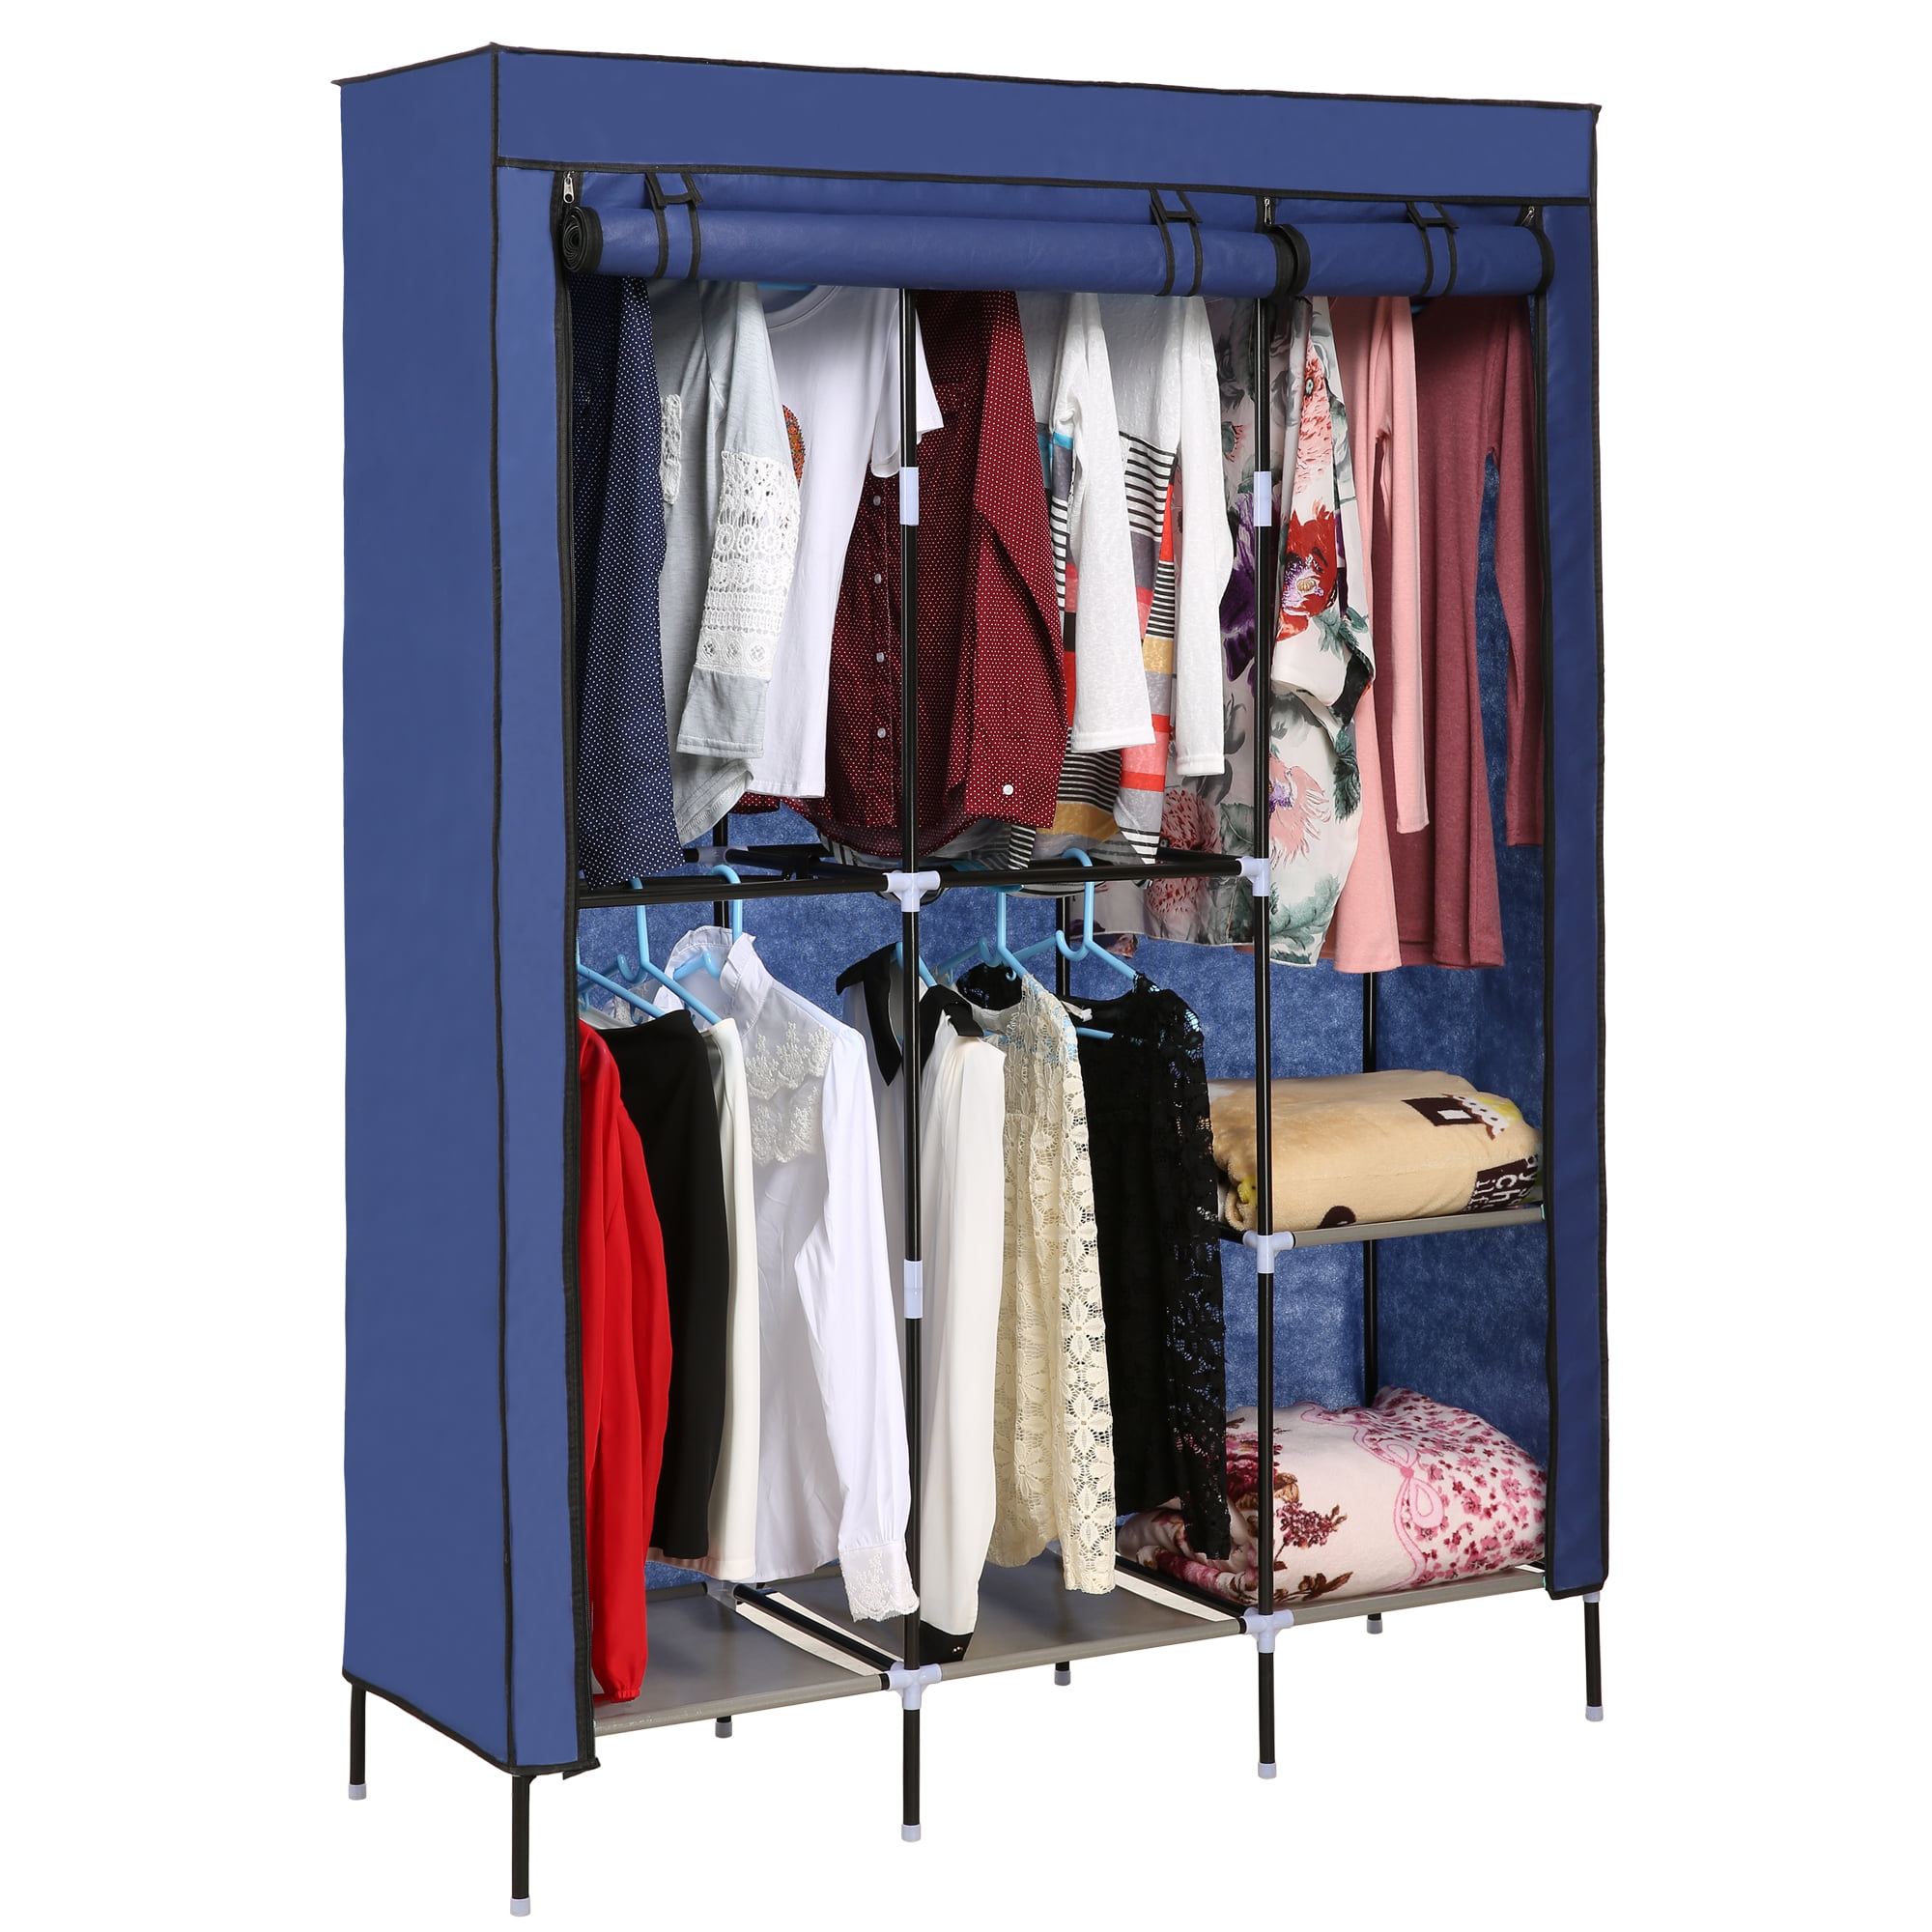 68" Portable Closet Storage Organizer Wardrobe Clothes Rack With Shelves